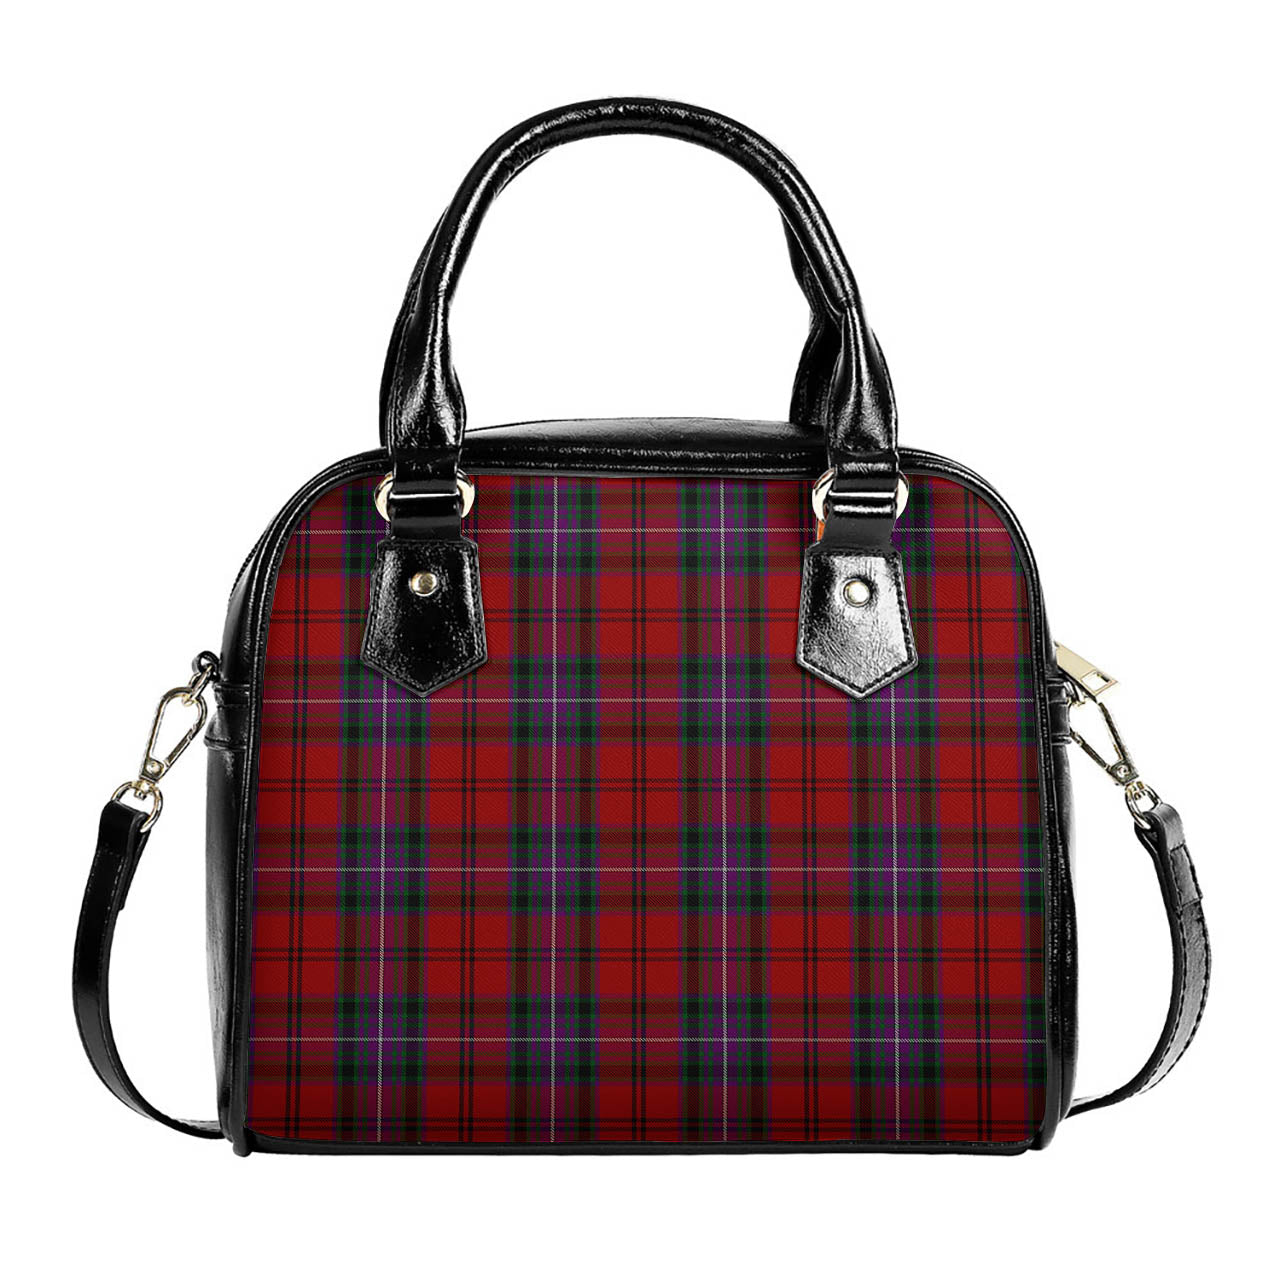 Kelly of Sleat Red Tartan Shoulder Handbags One Size 6*25*22 cm - Tartanvibesclothing